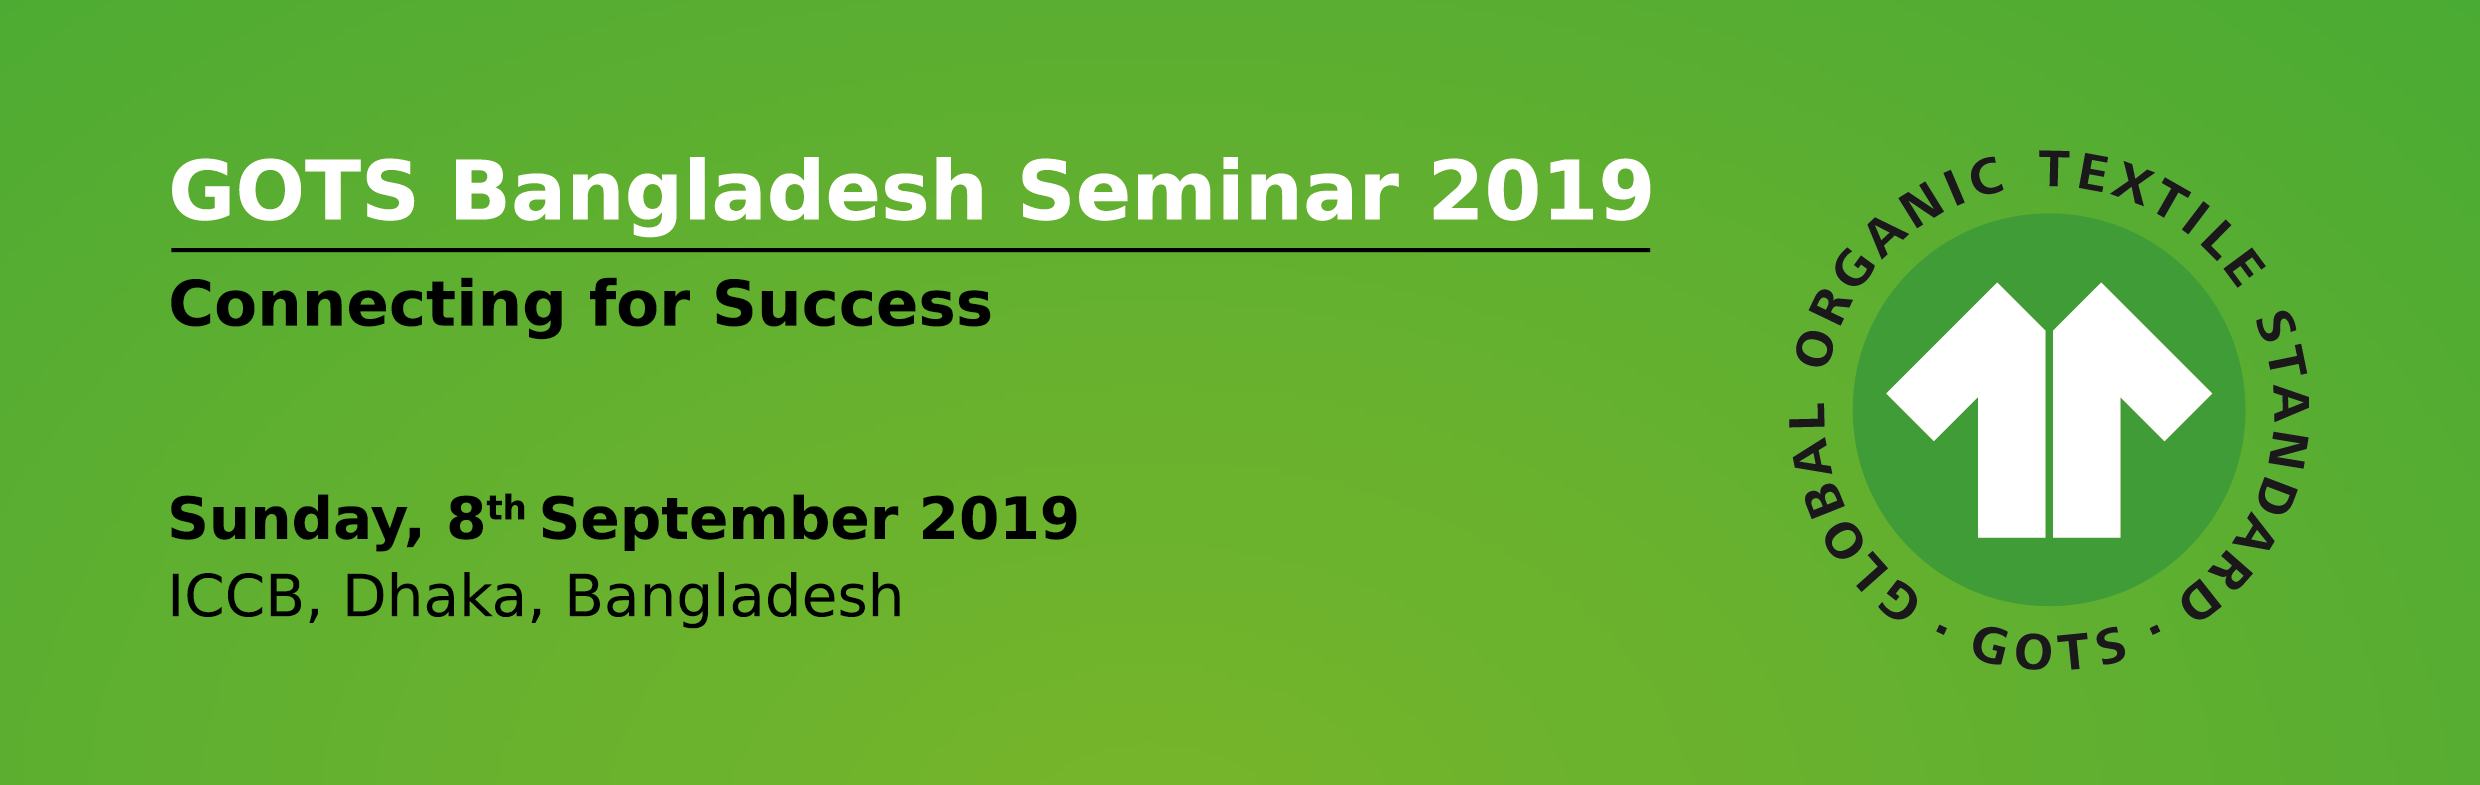 GOTS Banner Bangladesh Seminar 2019